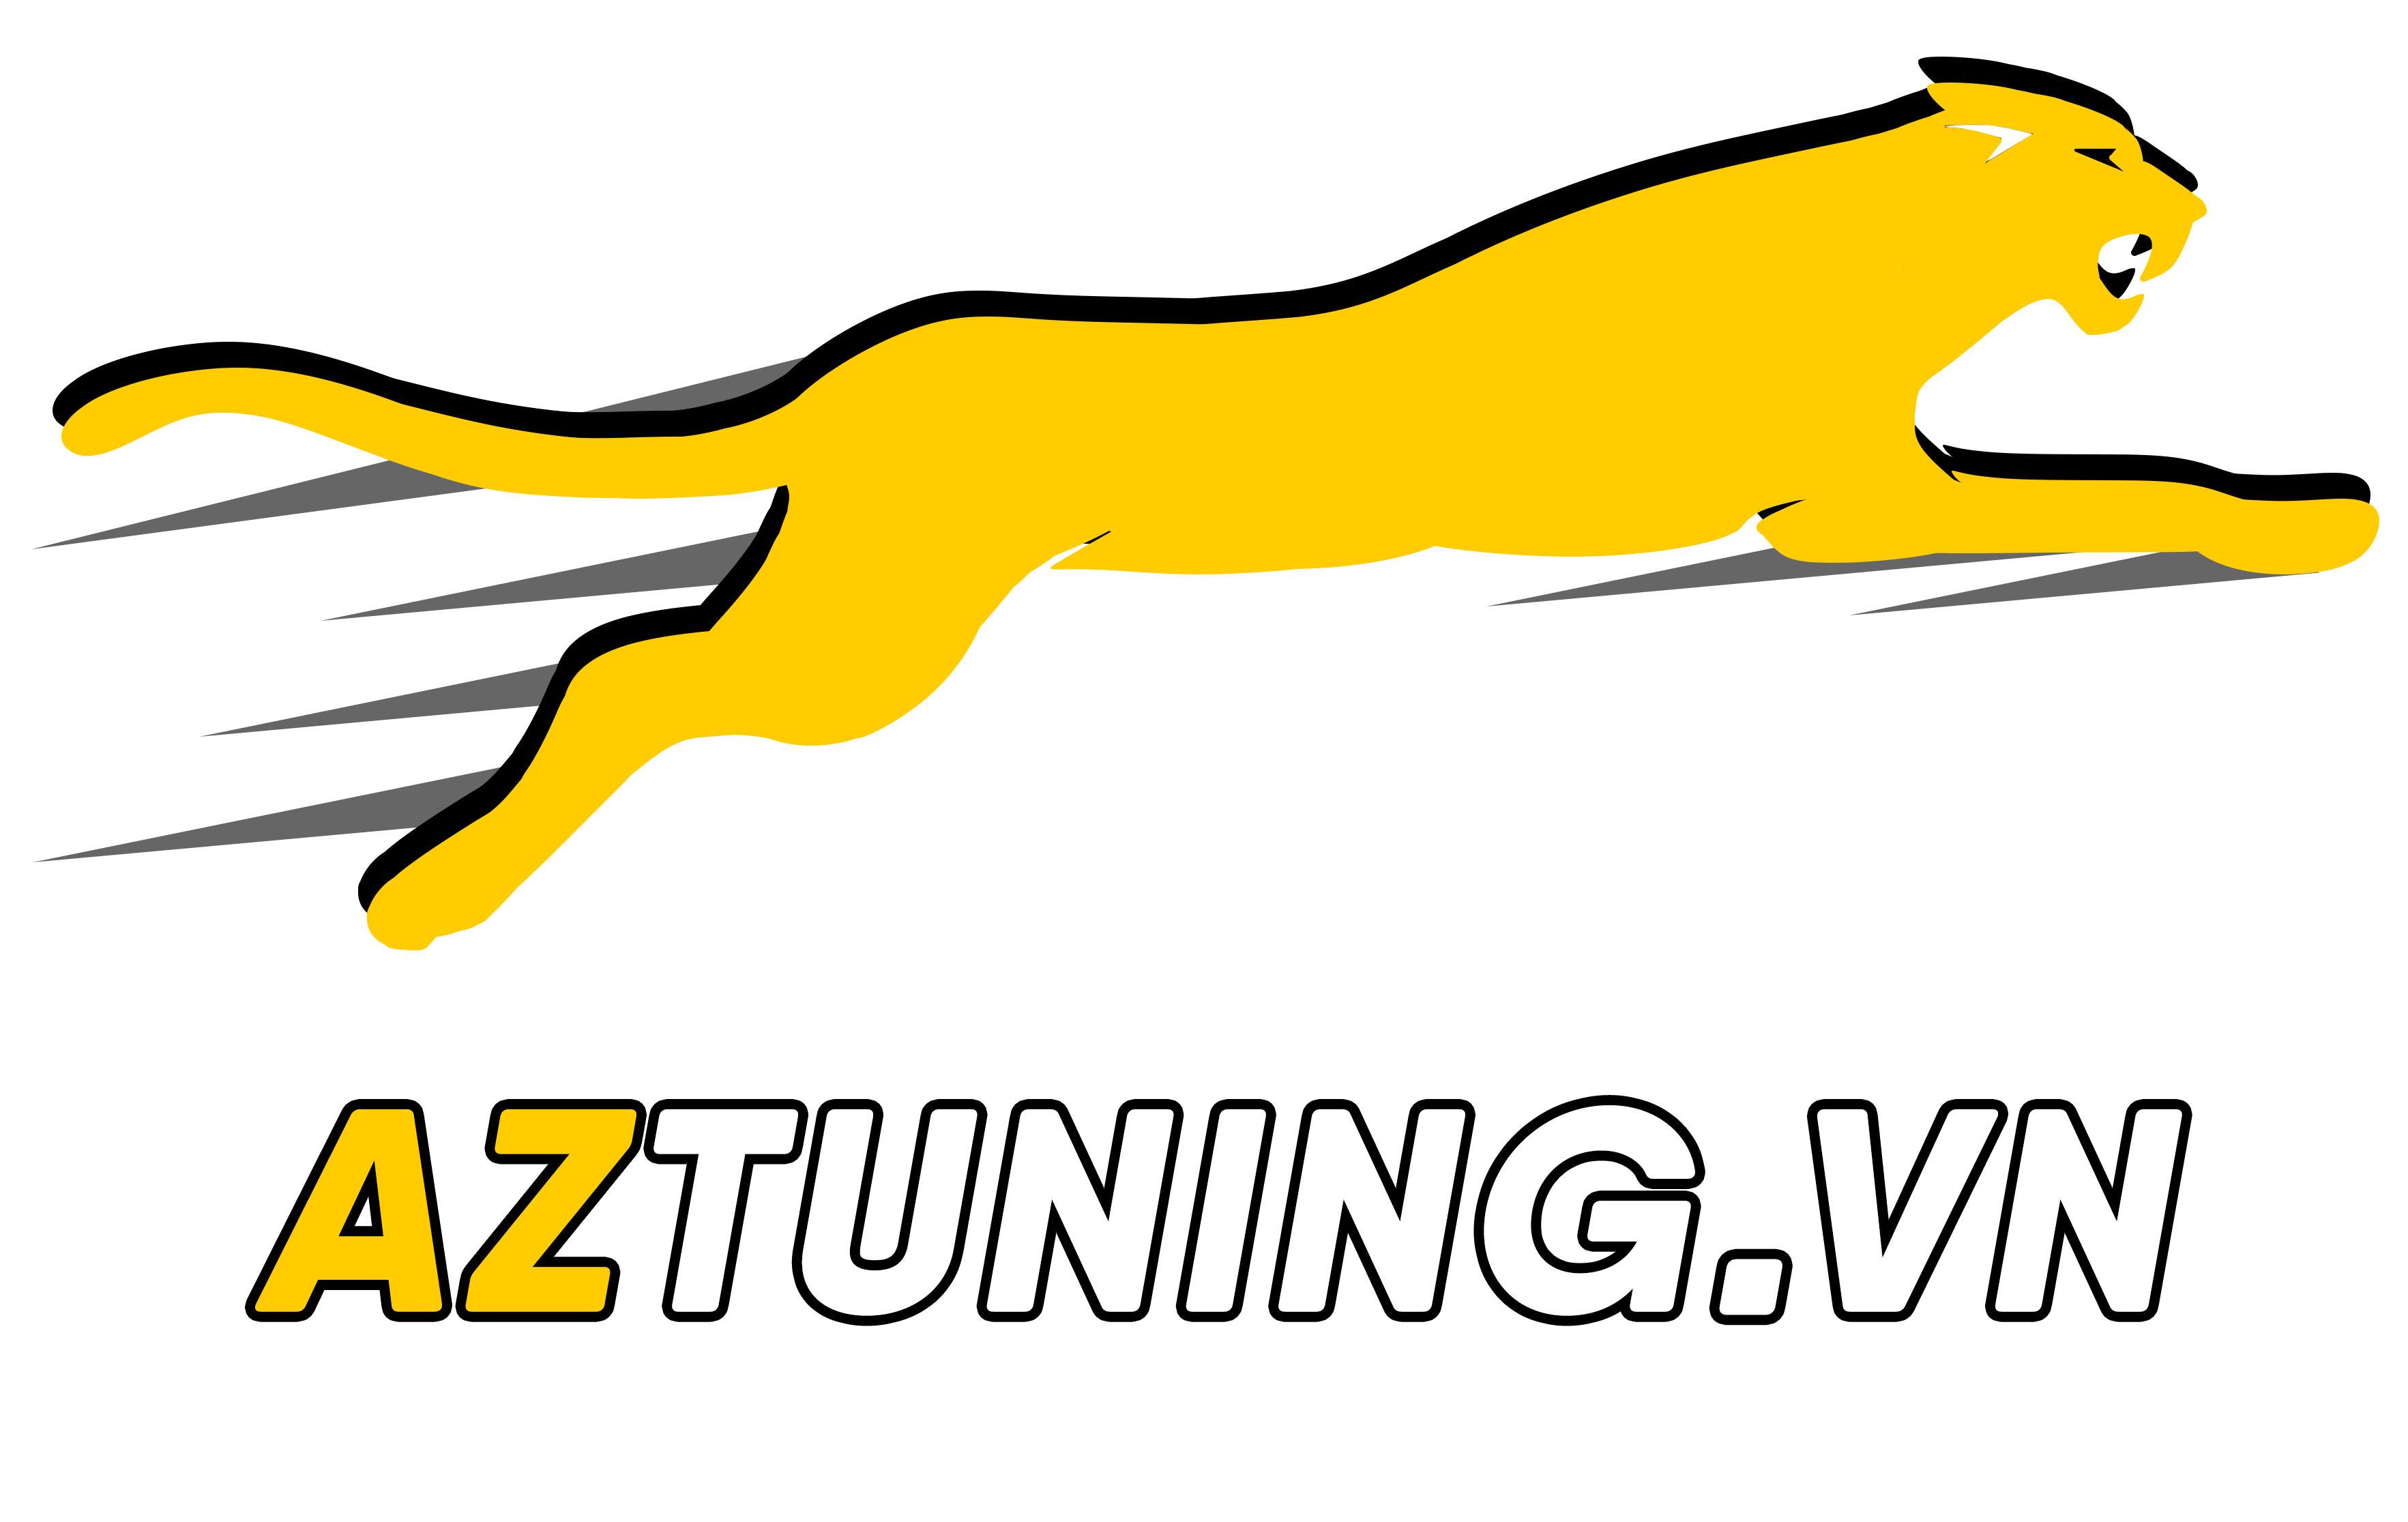 Aztuning.vn